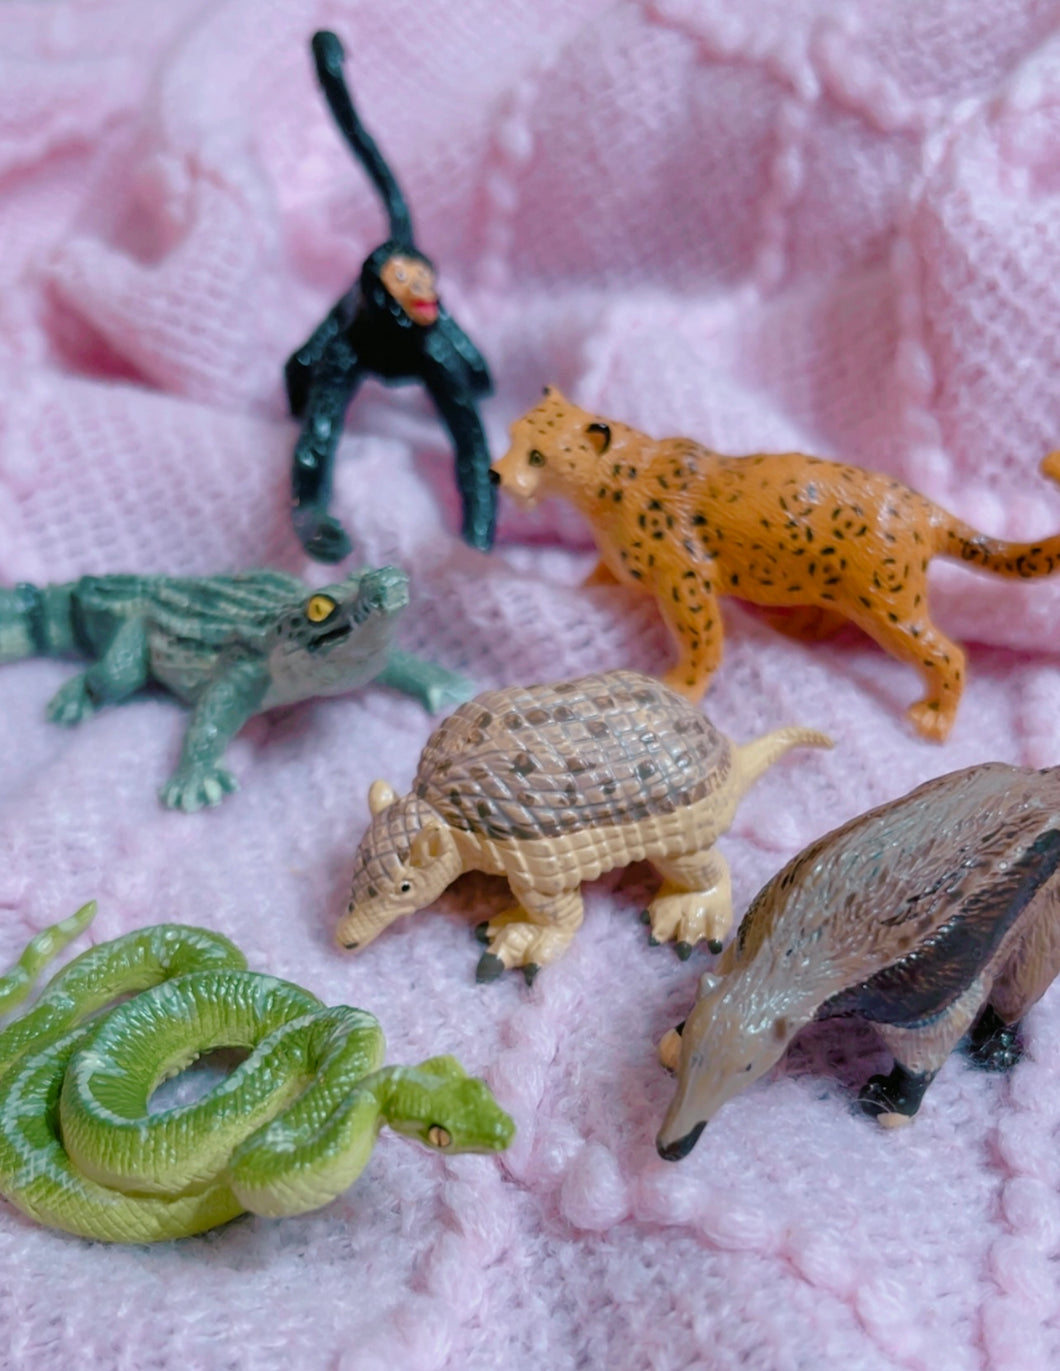 Safari LTD animal toys - monkey, caiman, cheetah, snake, anteater and aardvark - 3”~